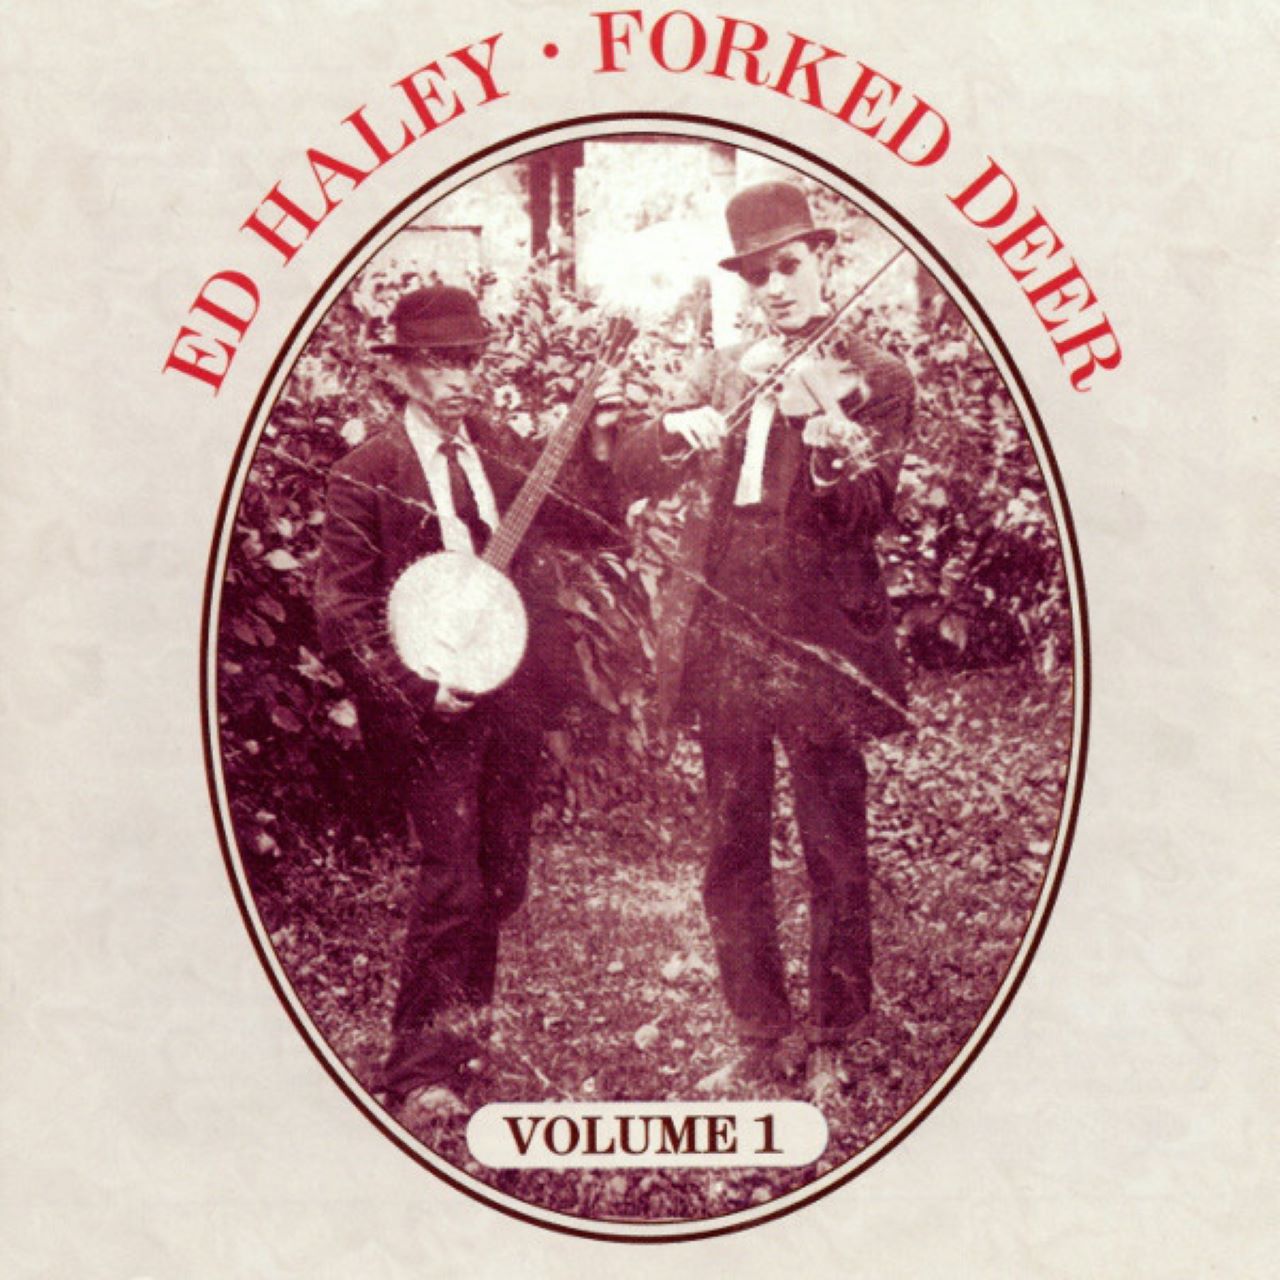 Ed Haley - Forked Deer cover album